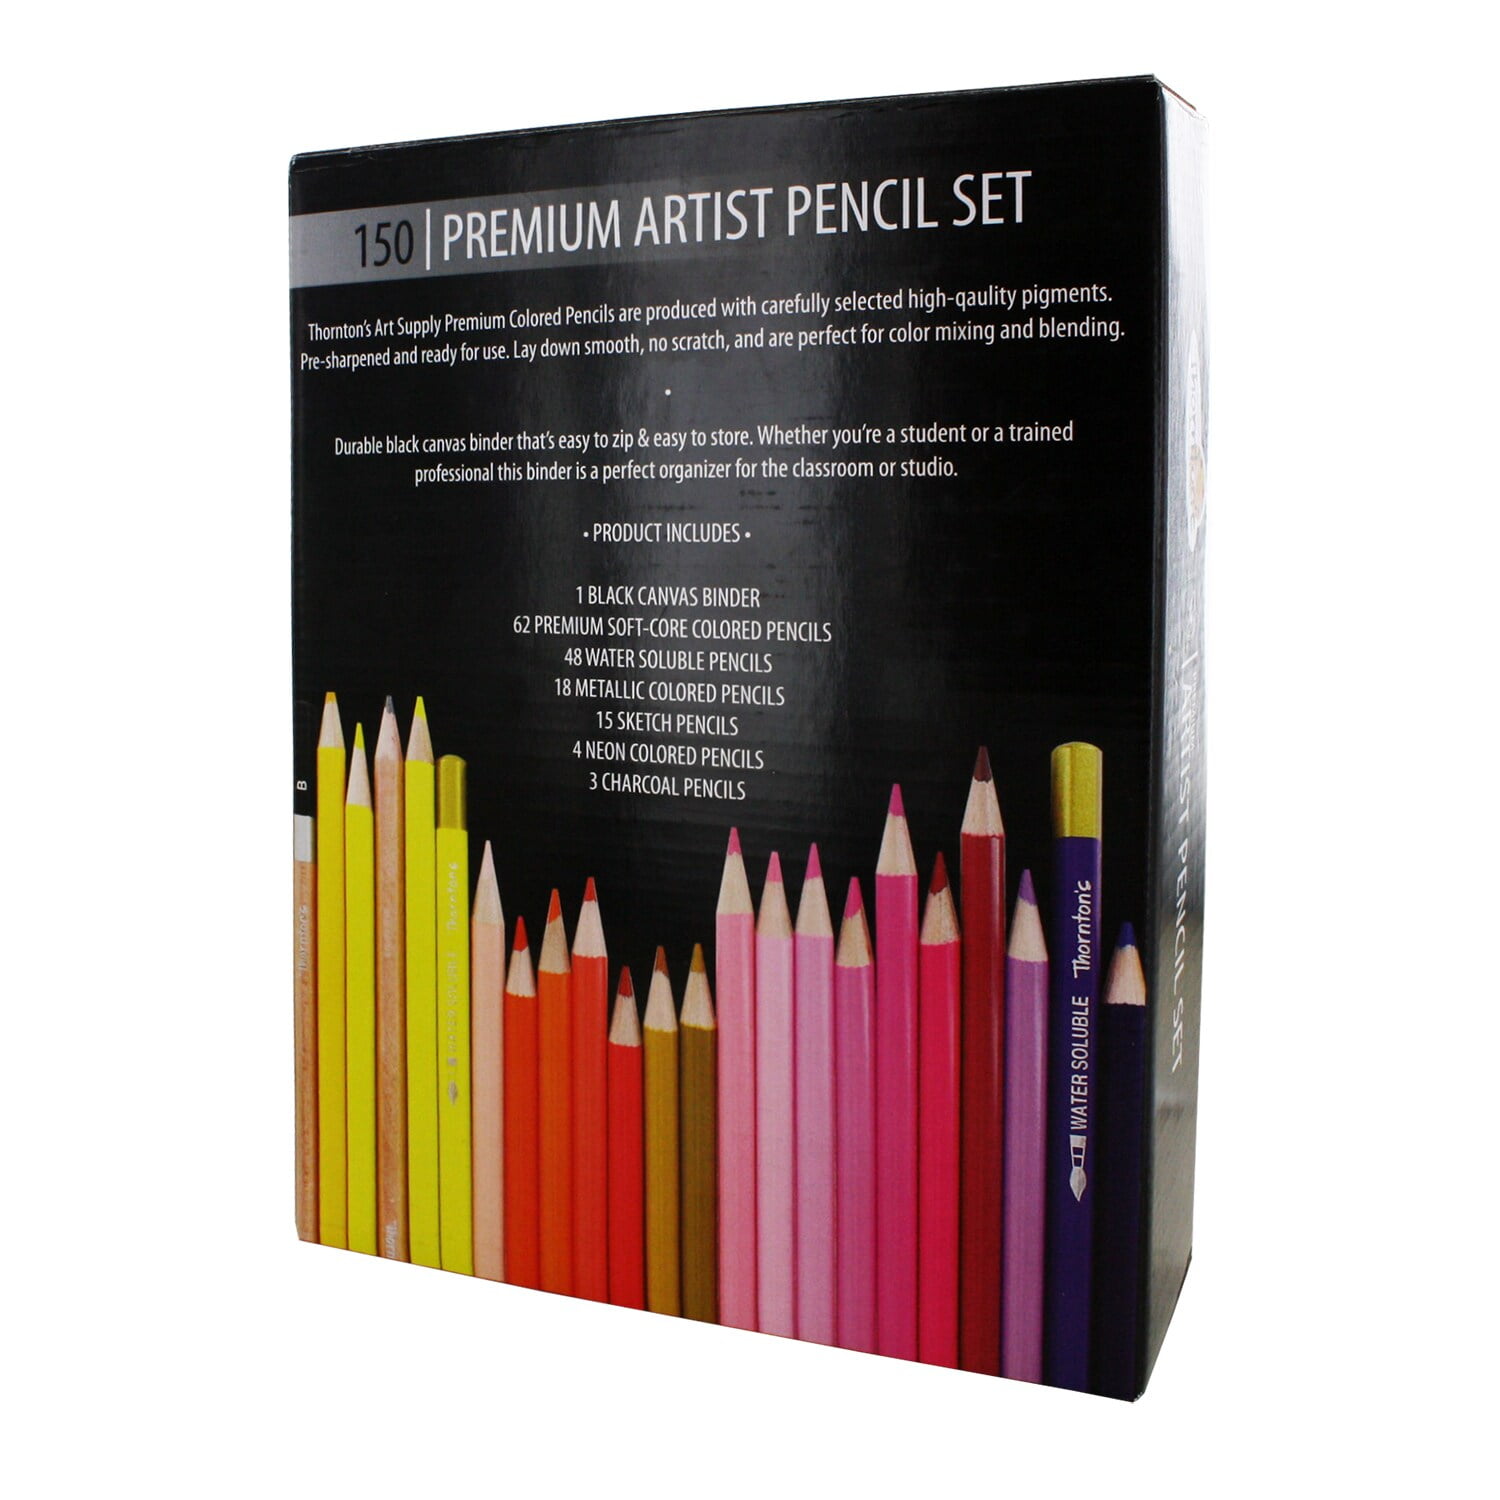 Skin Tone Colored Pencil Set — Camp Fashionista